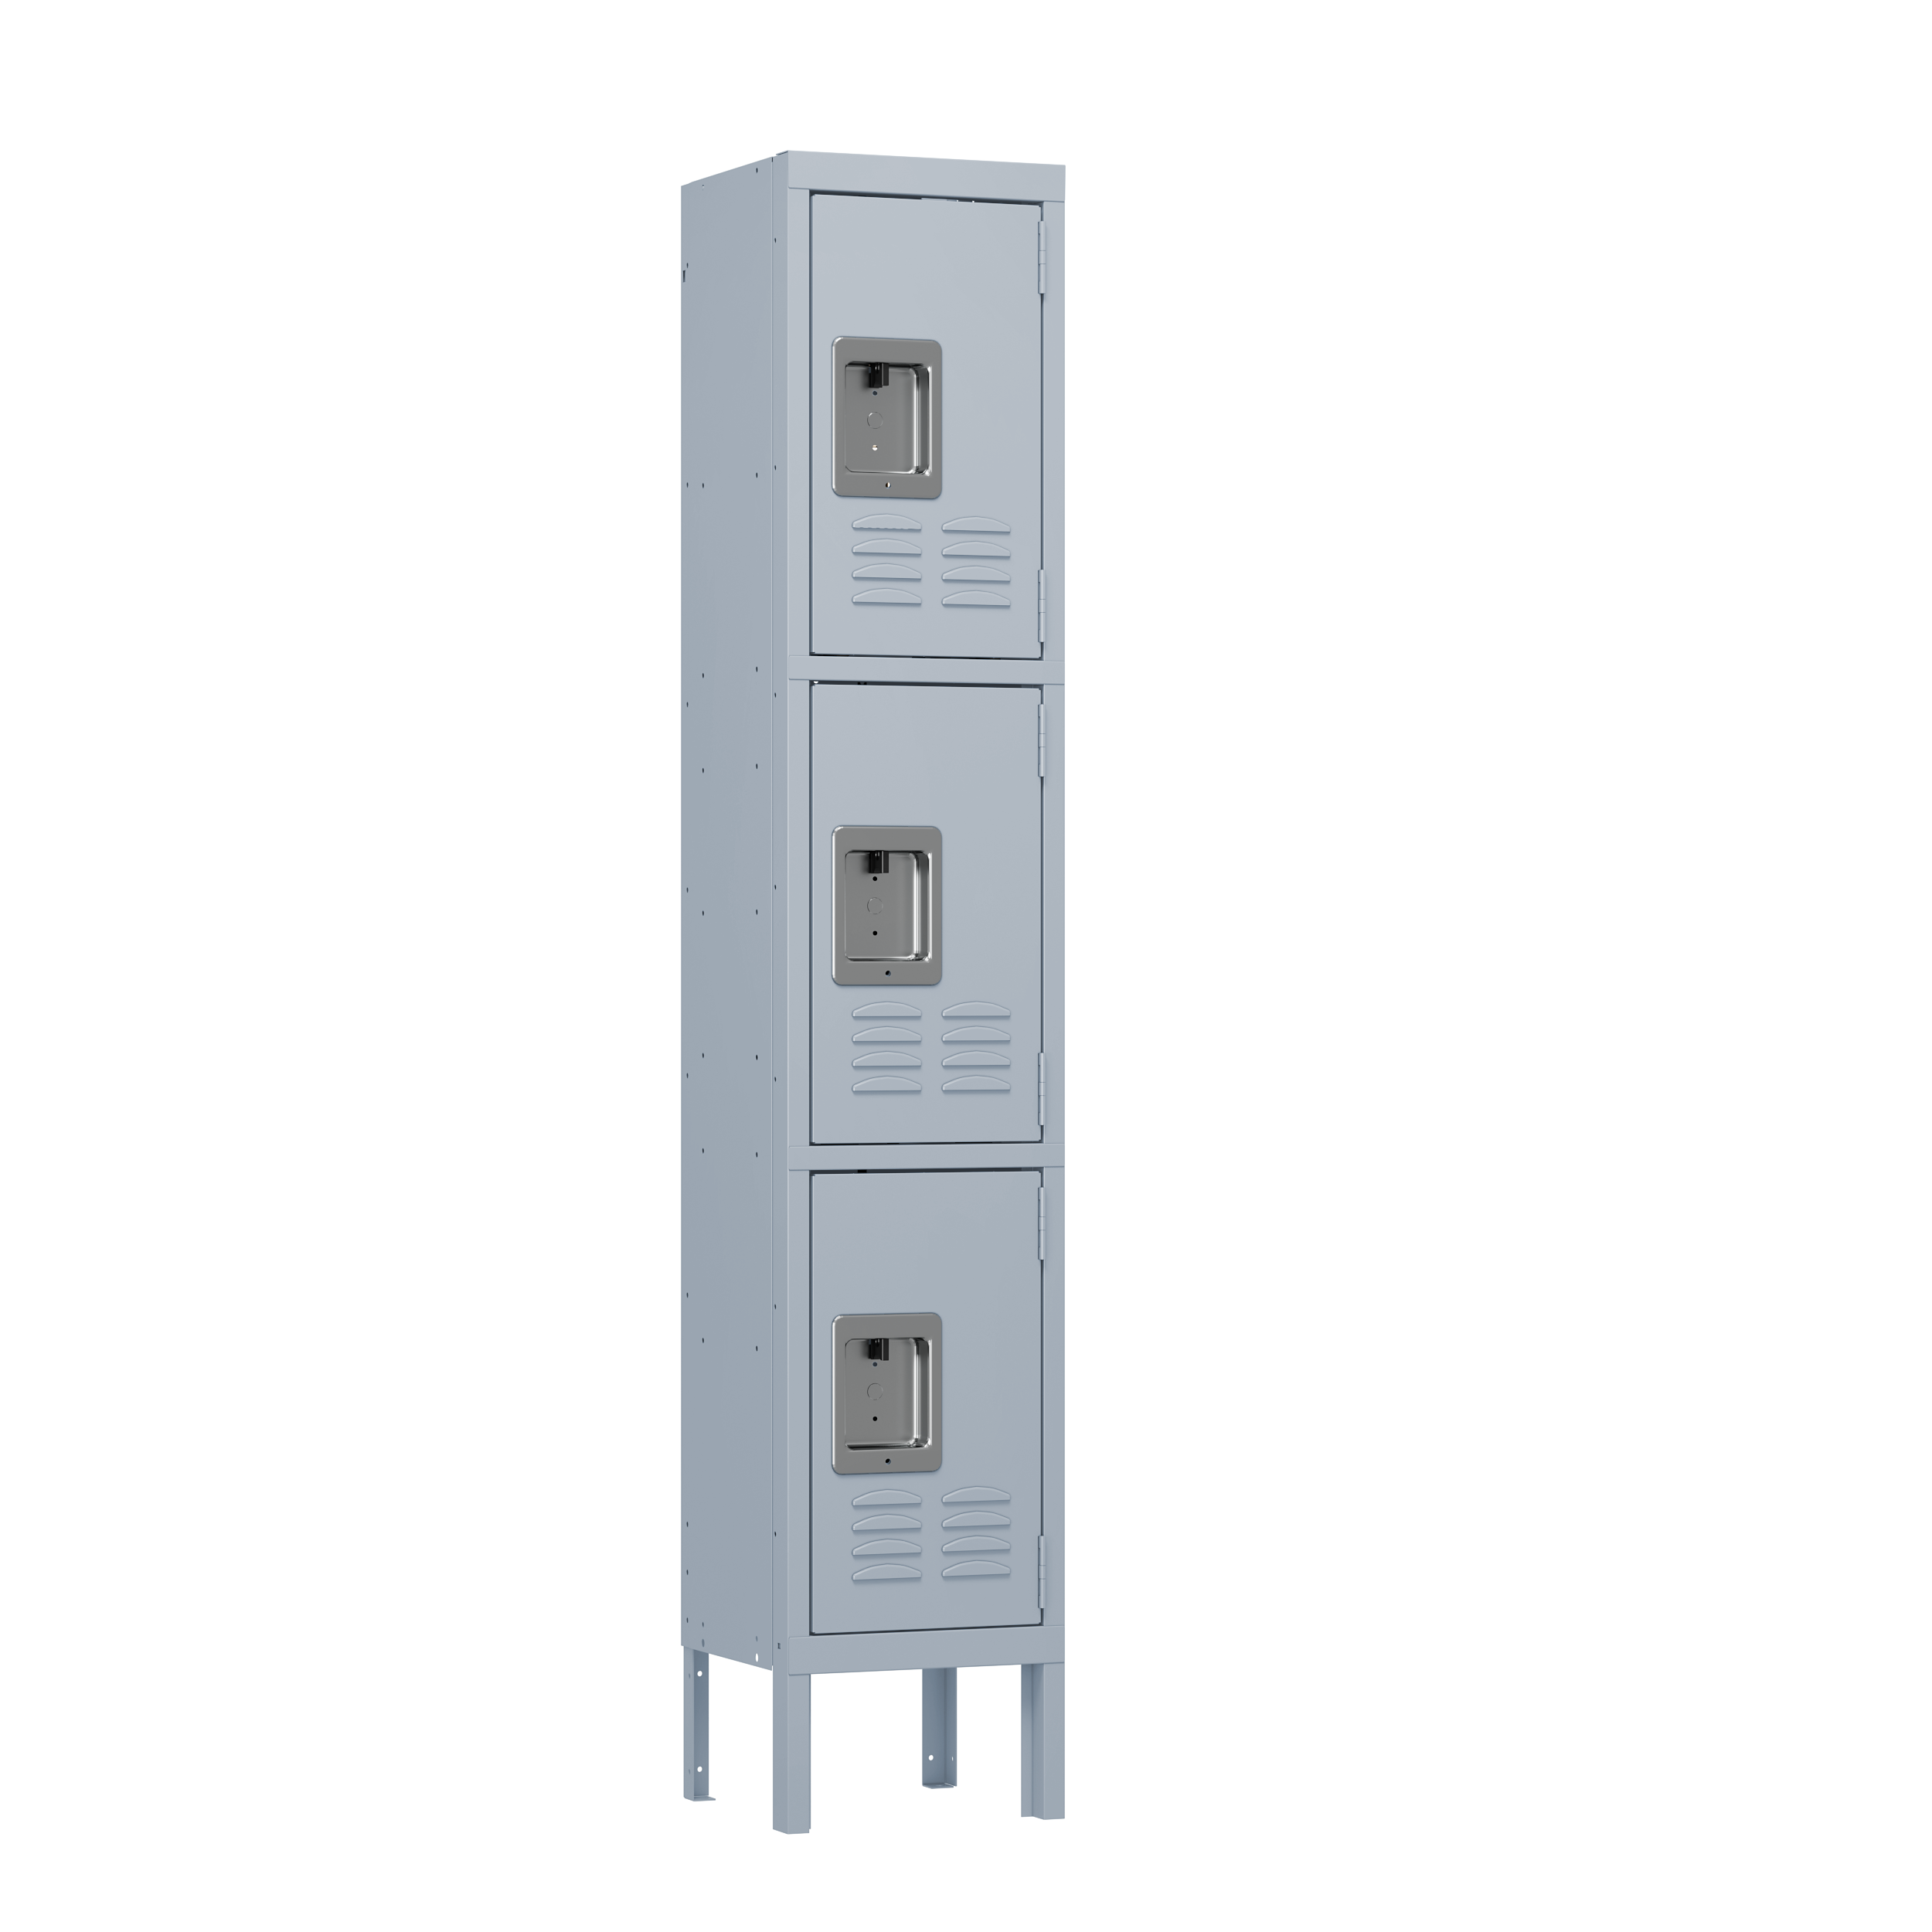 Three door single metal locker